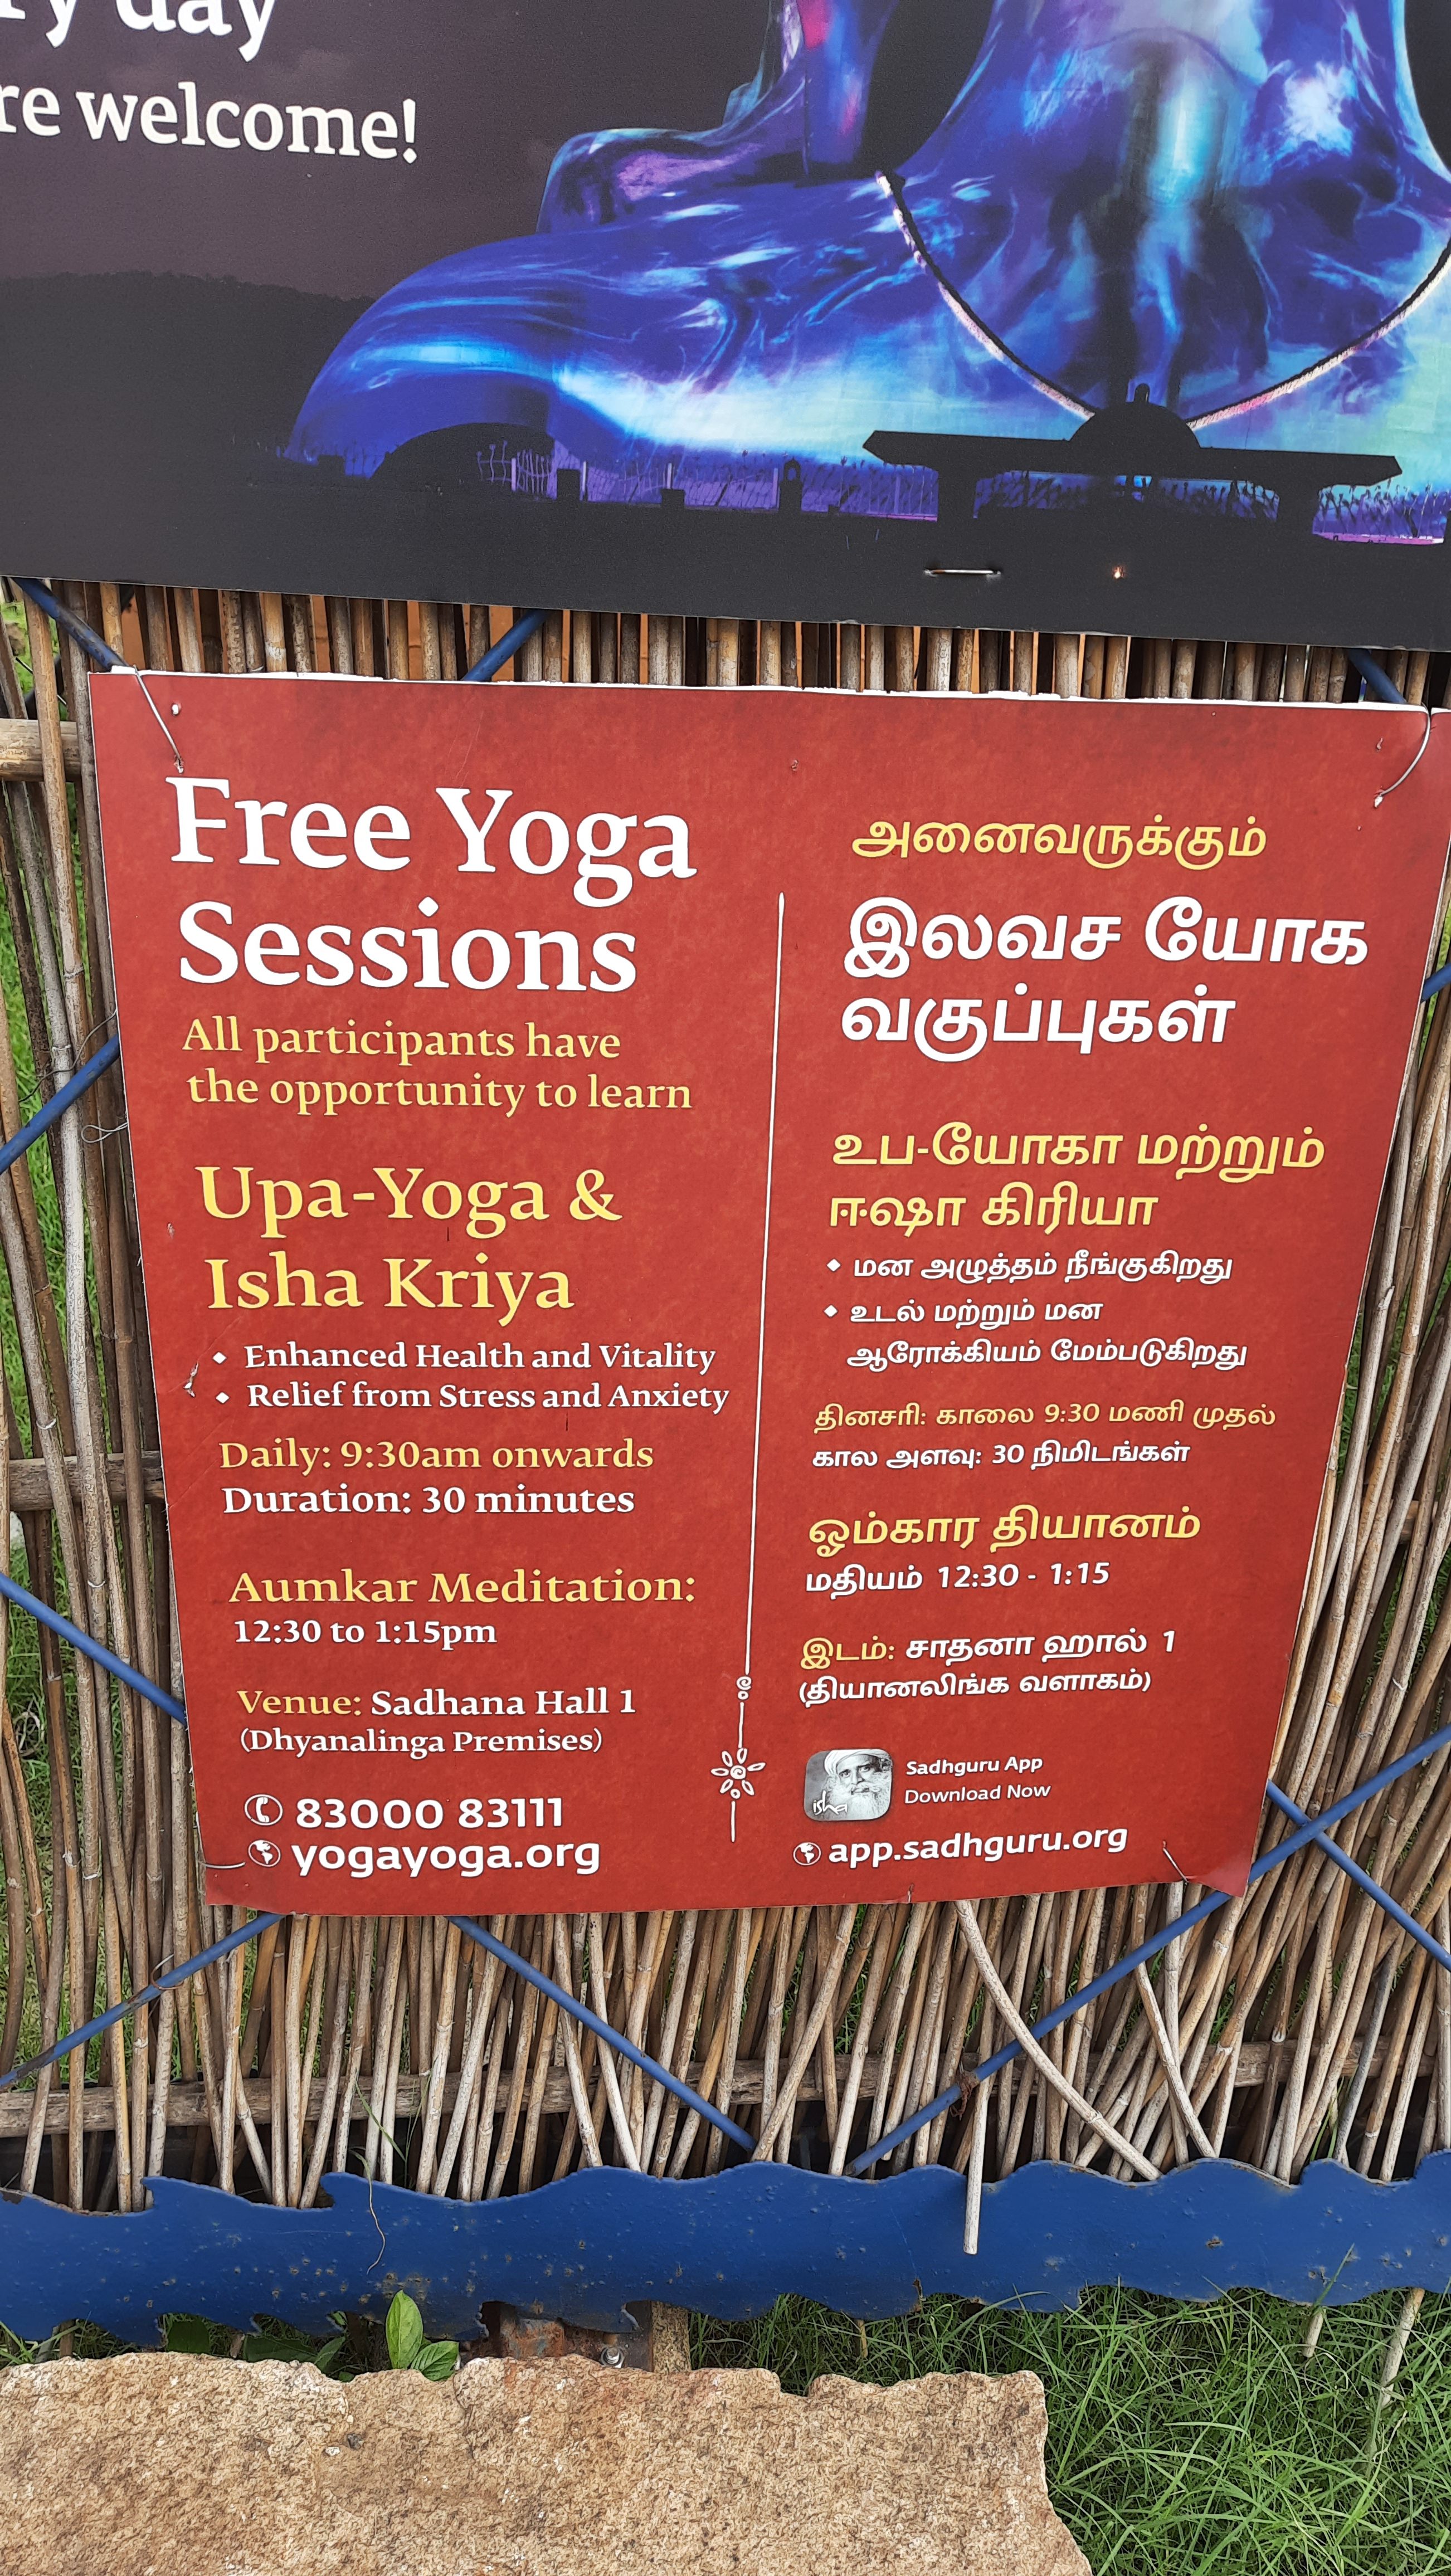 Free yoga sessions at Adi Yogi ashram